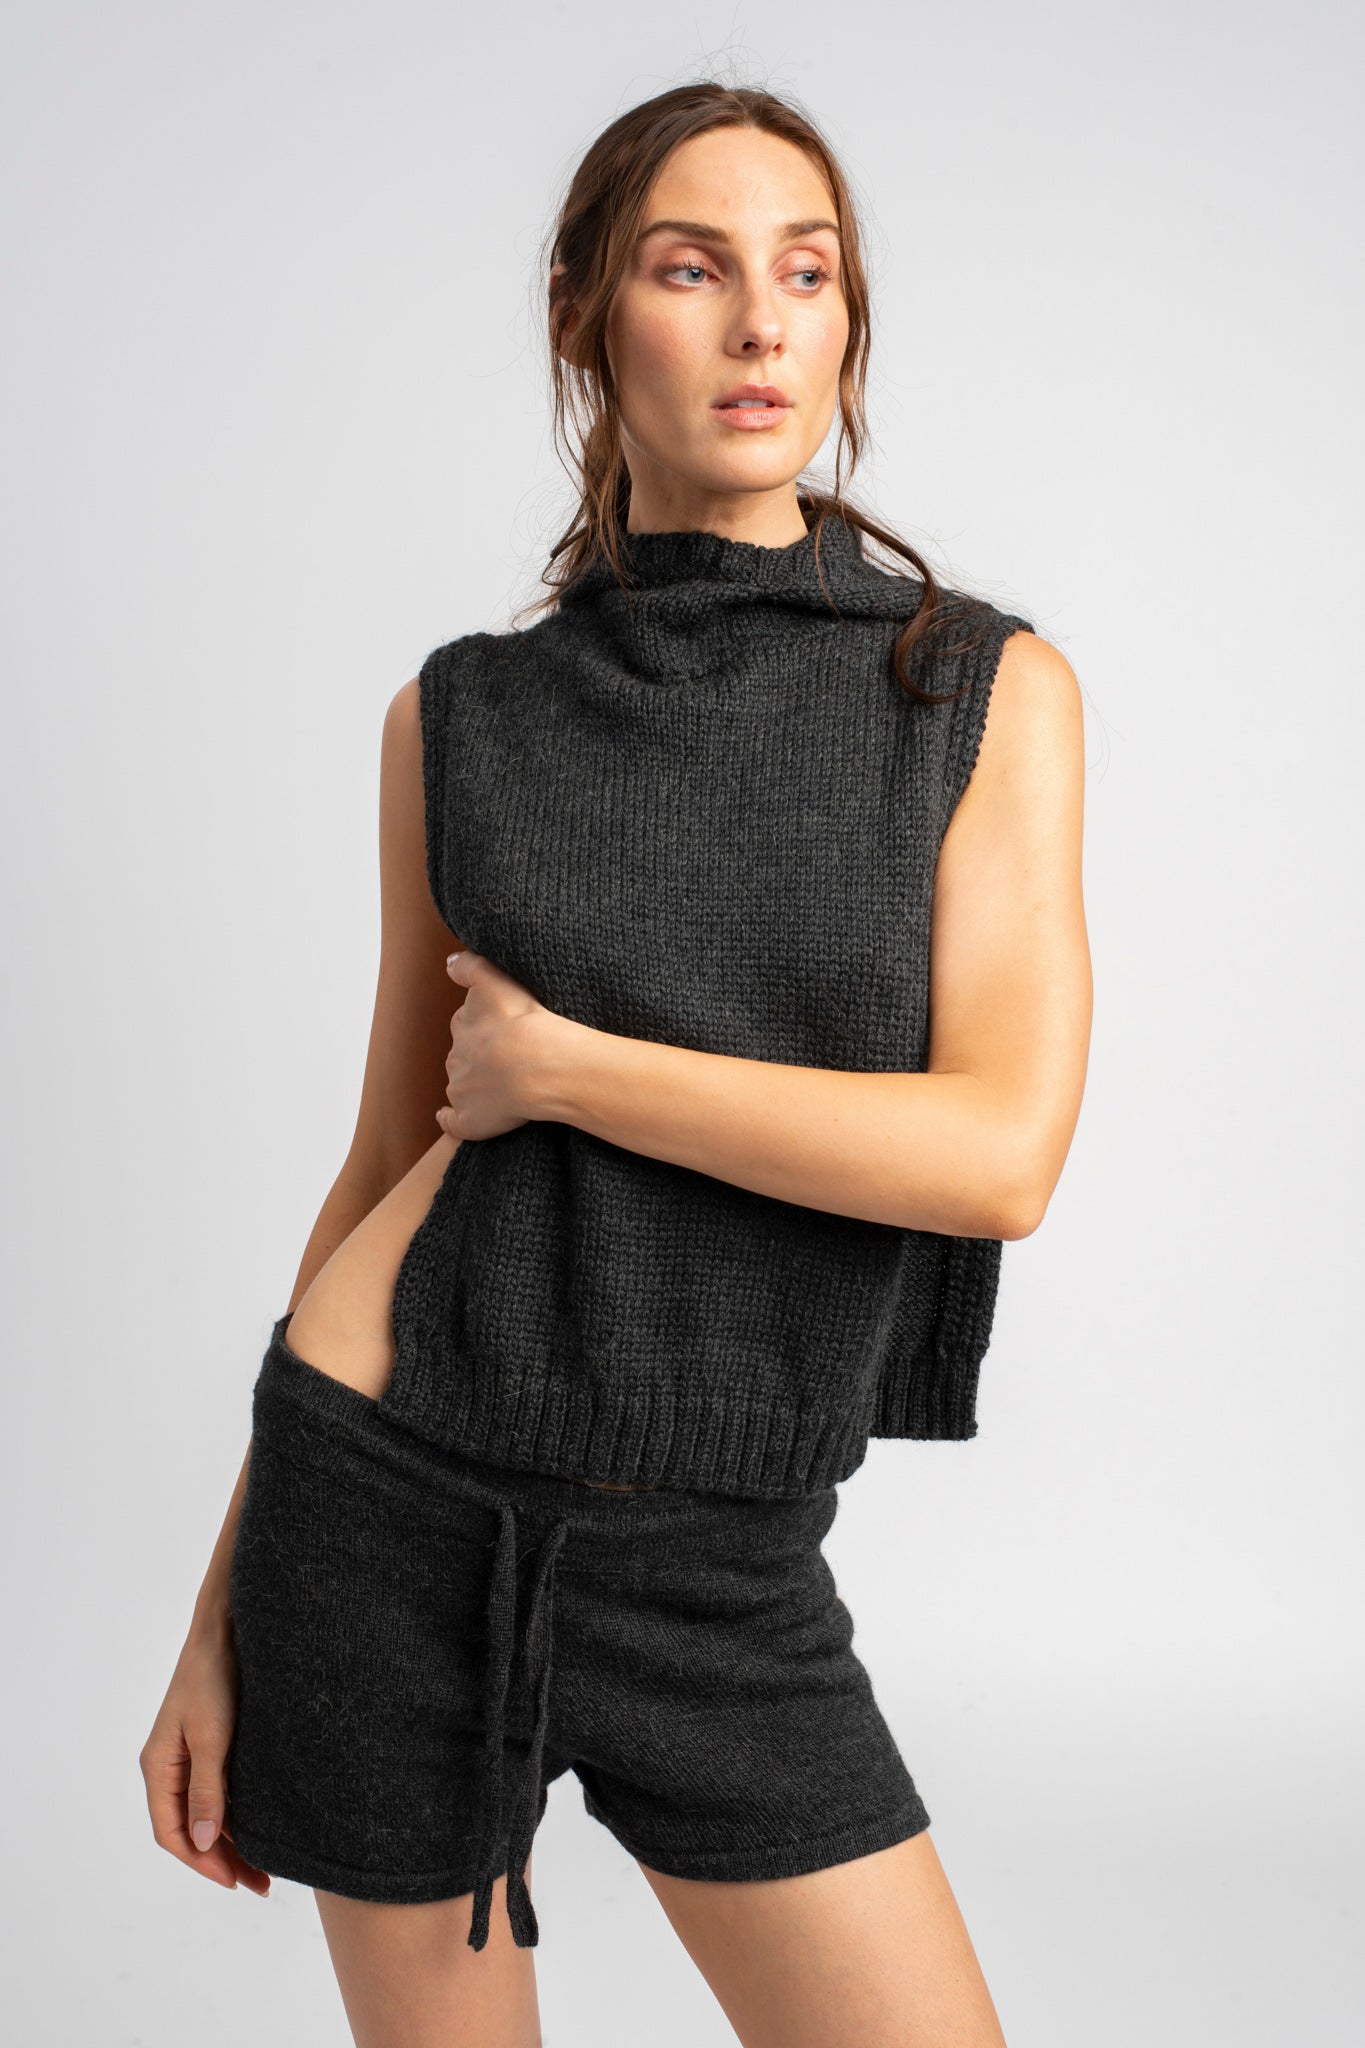 Dark Trade Fluid Fair Gender Alpaca Grey | Shorts Knitwear